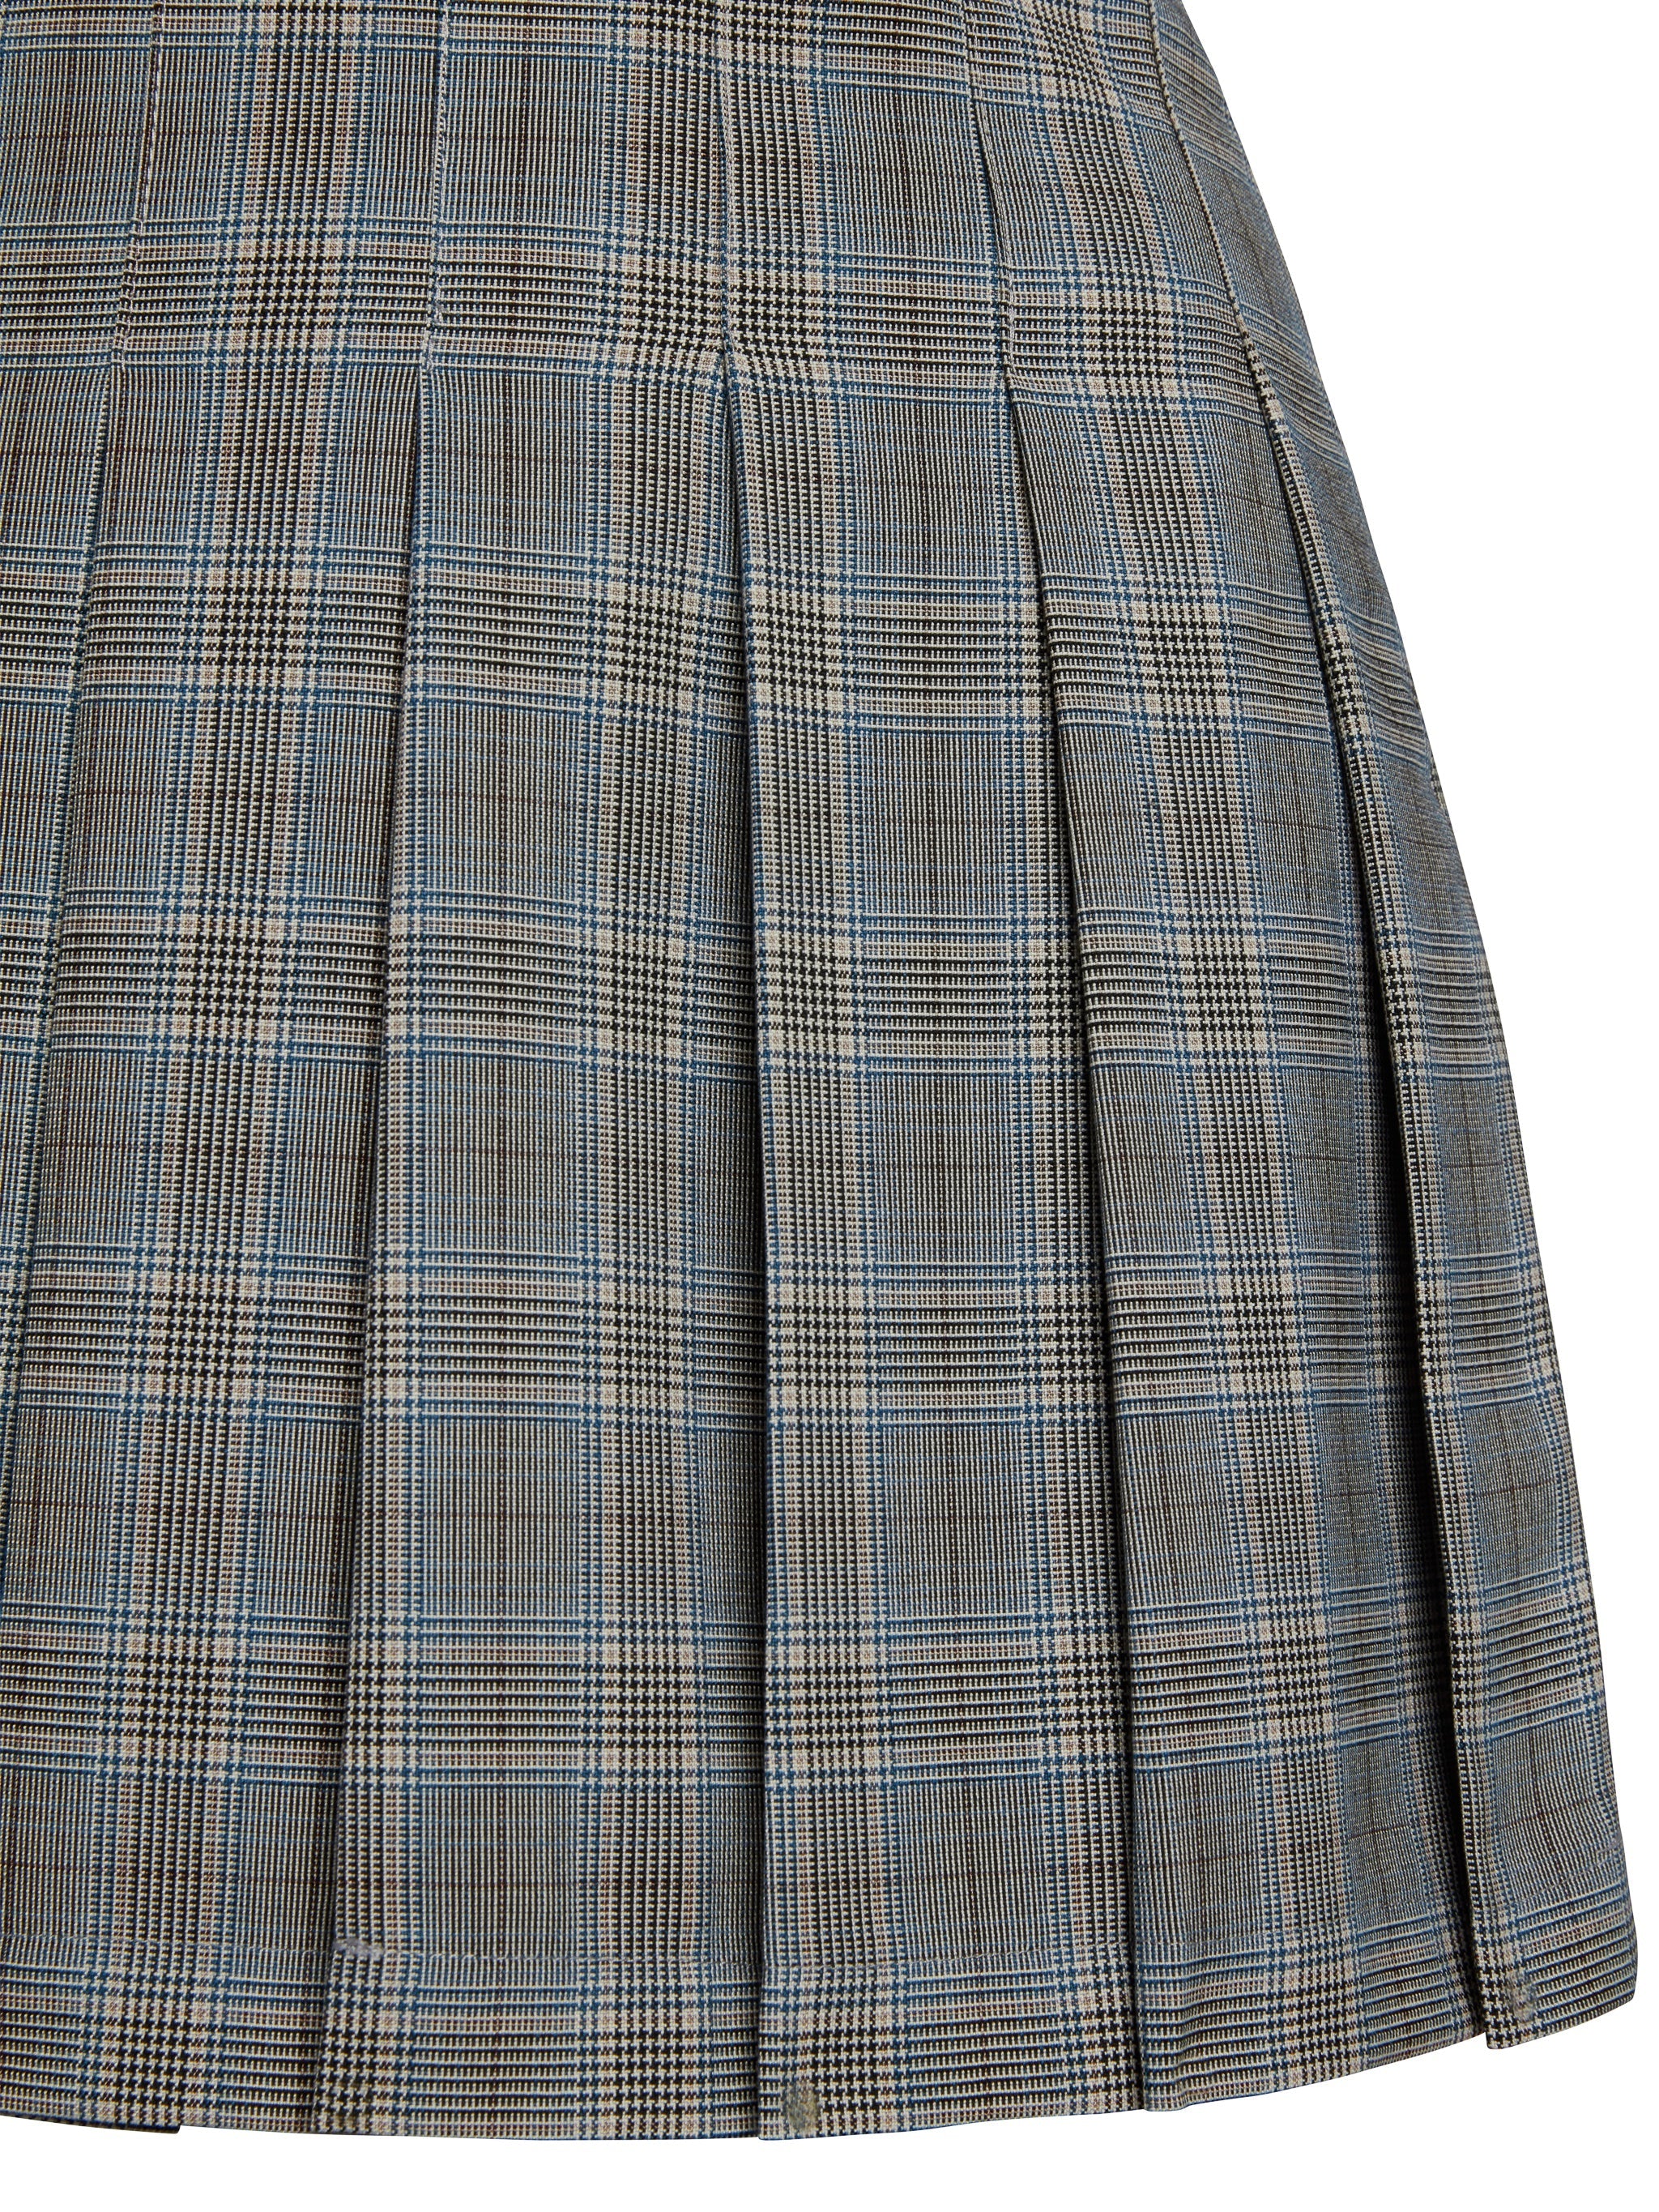 Skirt, Plaid #80 Full Box Pleat Adult Sizes | Family Uniforms